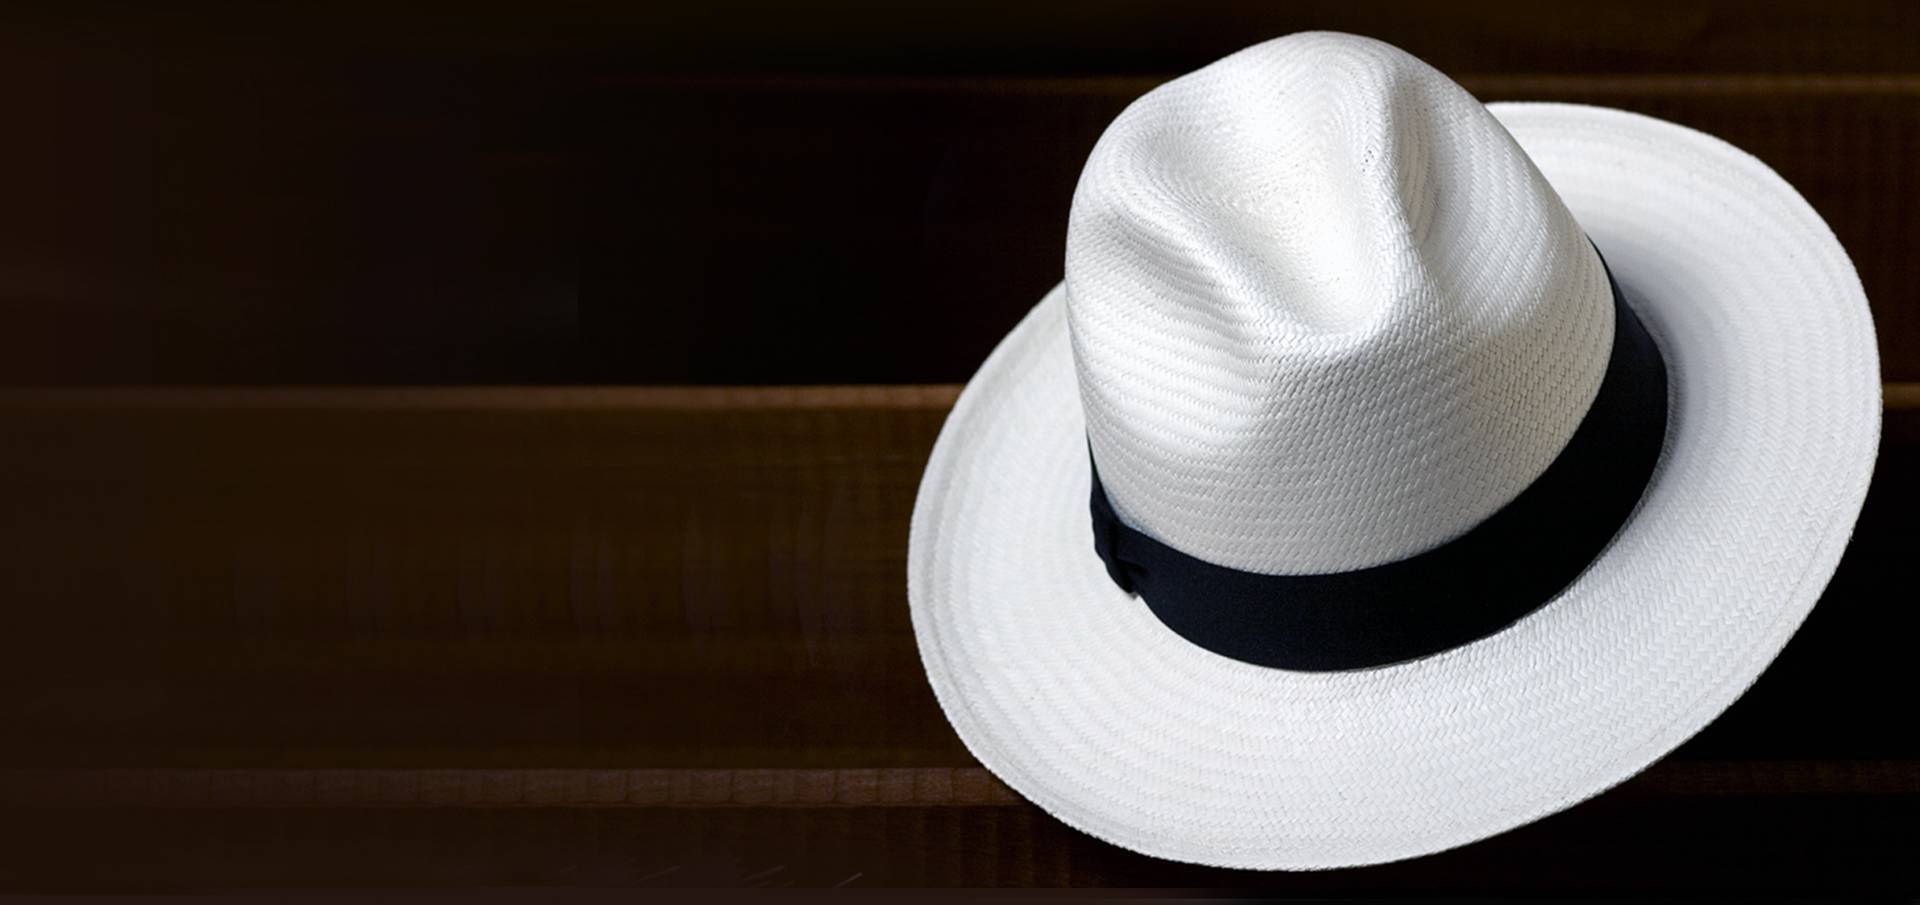 Panama hats